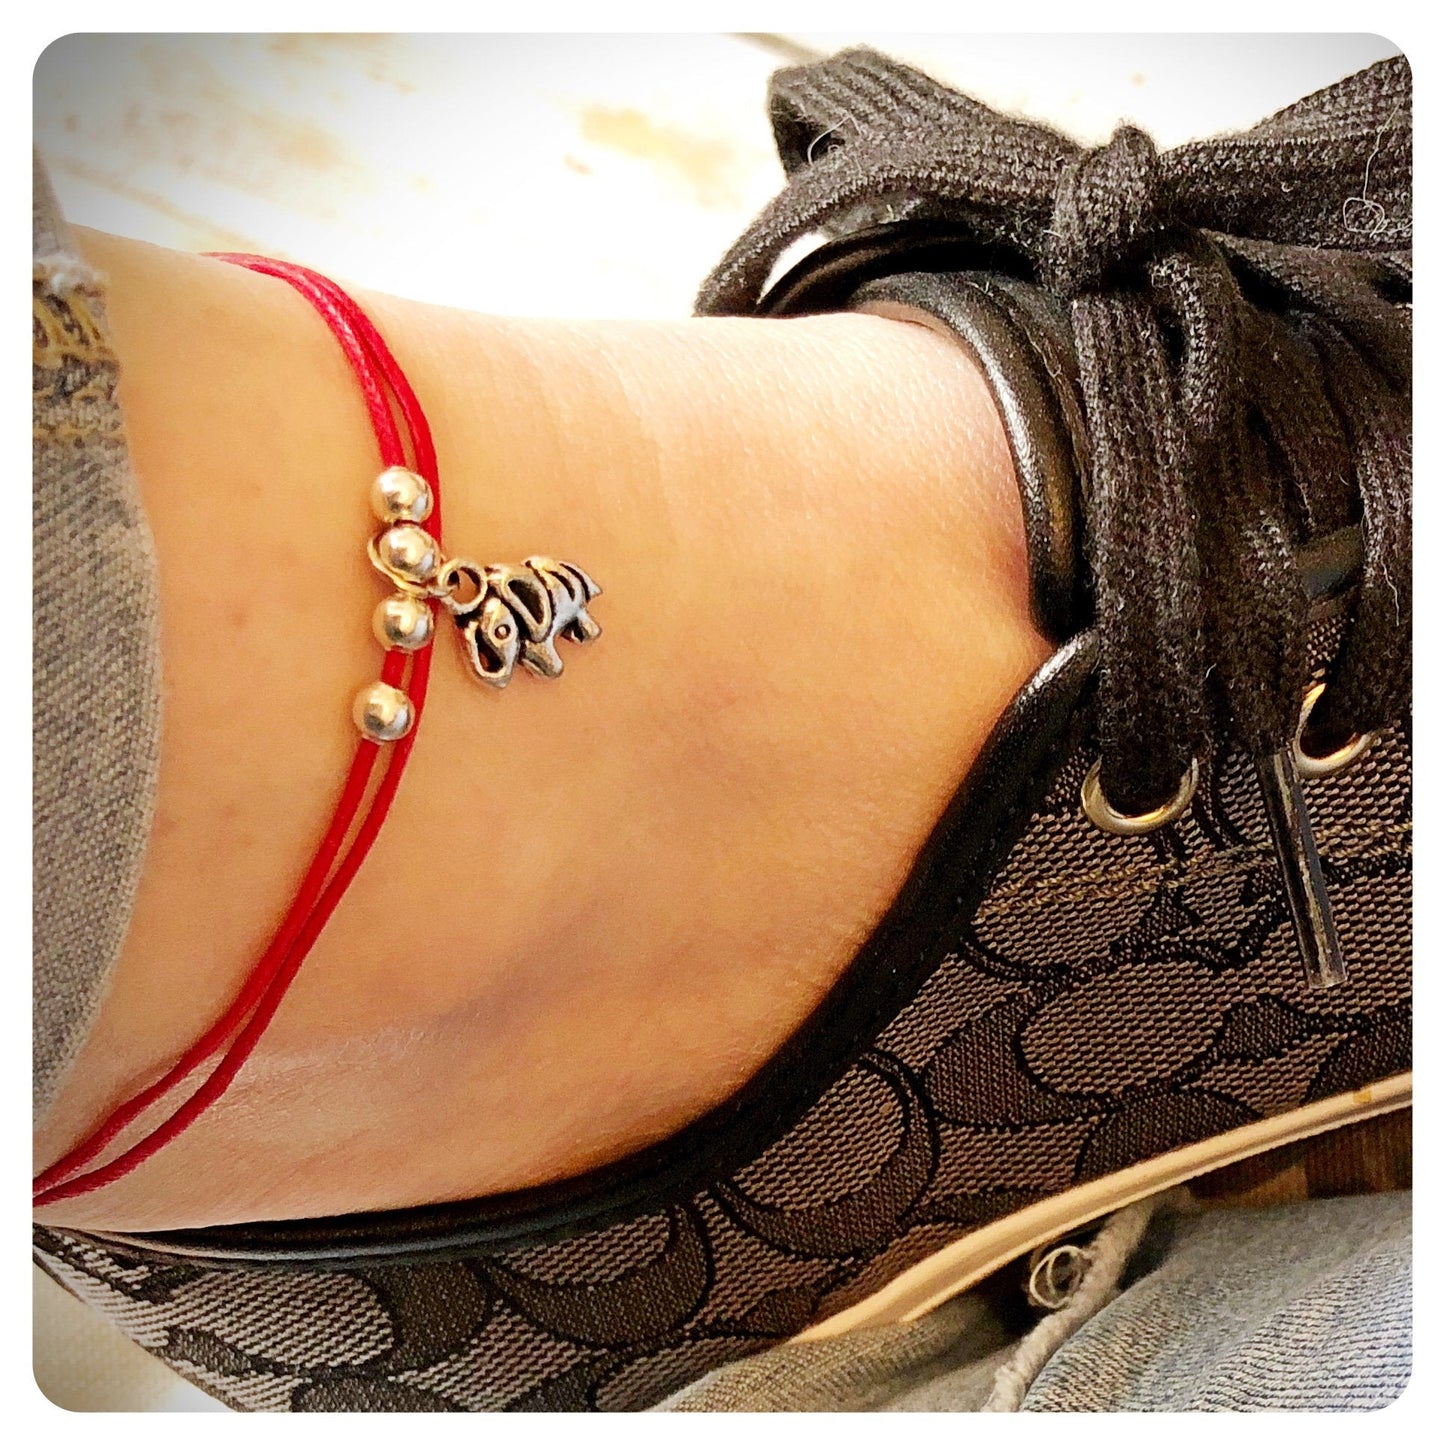 Elephant Anklet, Adjustable Ankle Bracelet, Elephant Charm Anklet, Tibetan Silver Ankle Bracelet, You Are Strong Gift